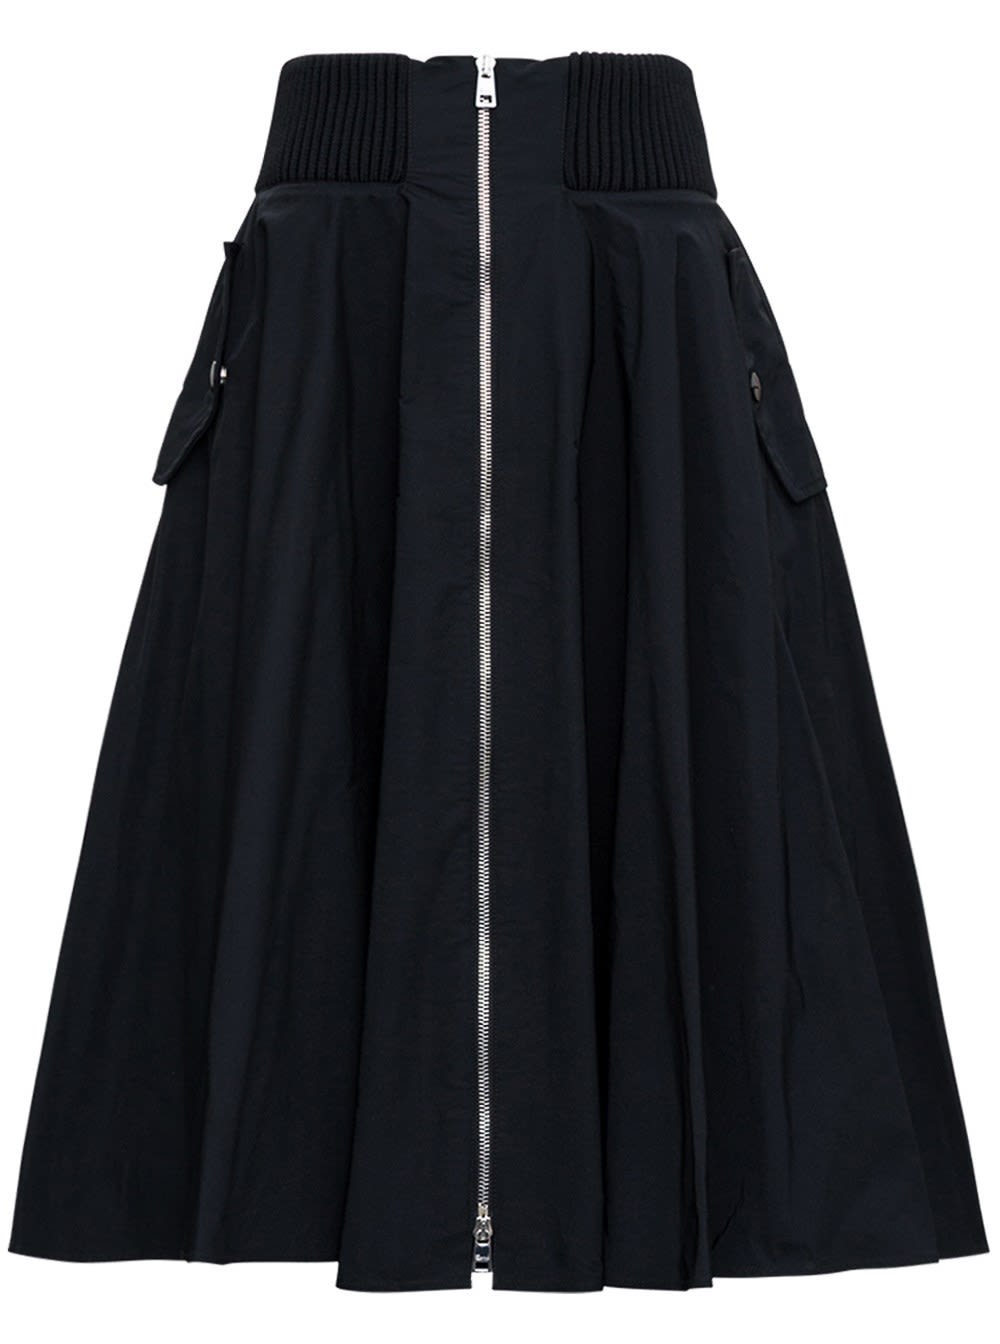 RED Valentino Long Black Taffeta Skirt